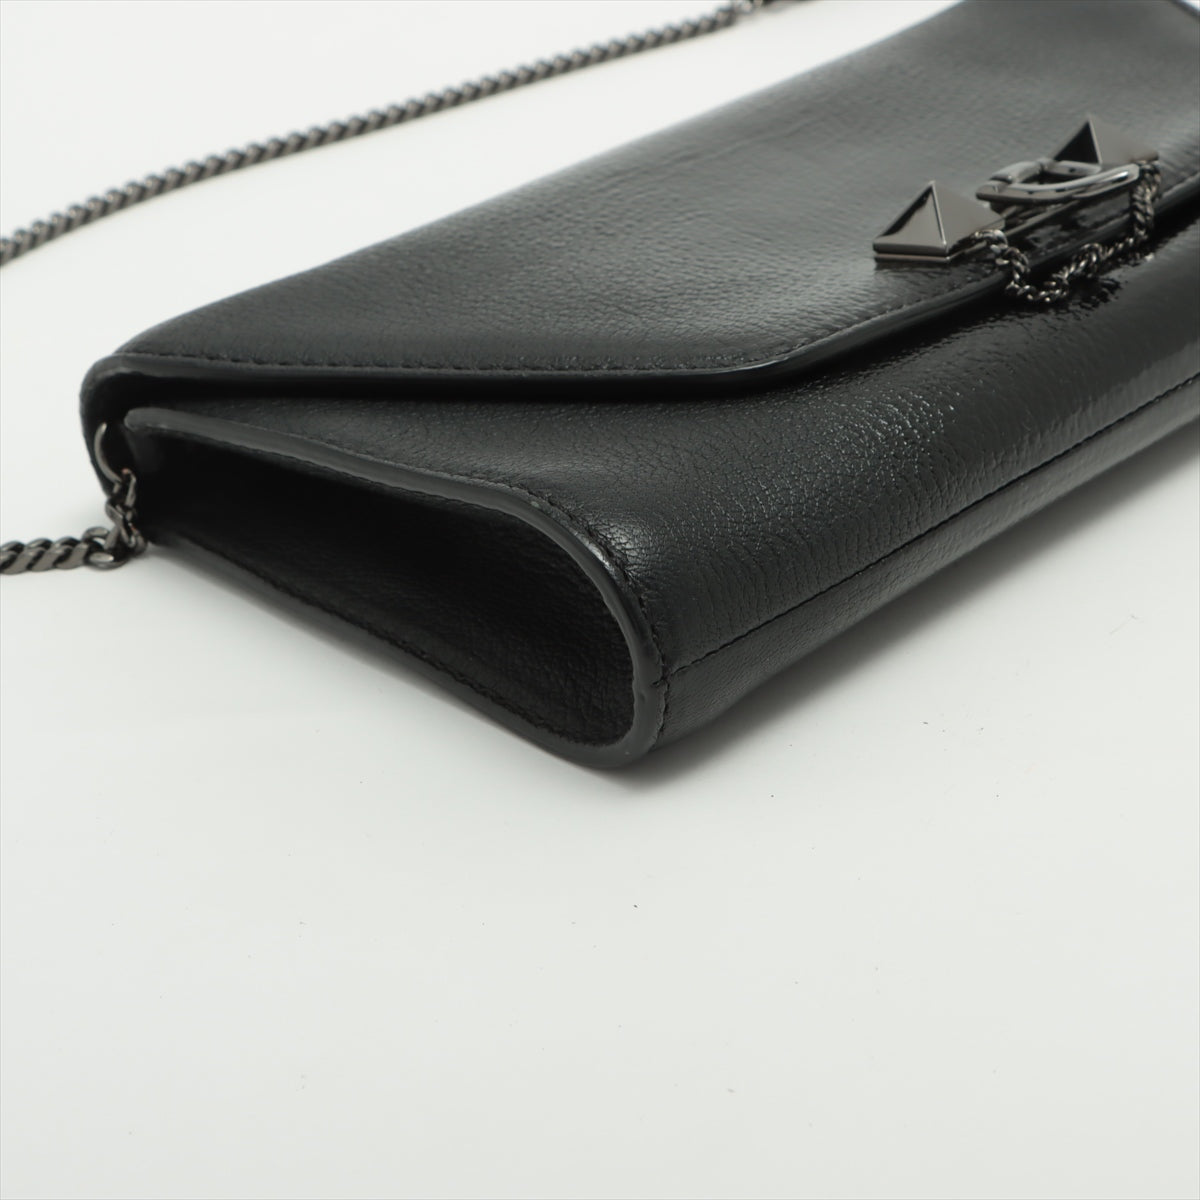 Valentino Garavani Rock Studs Leather Chain shoulder bag Black